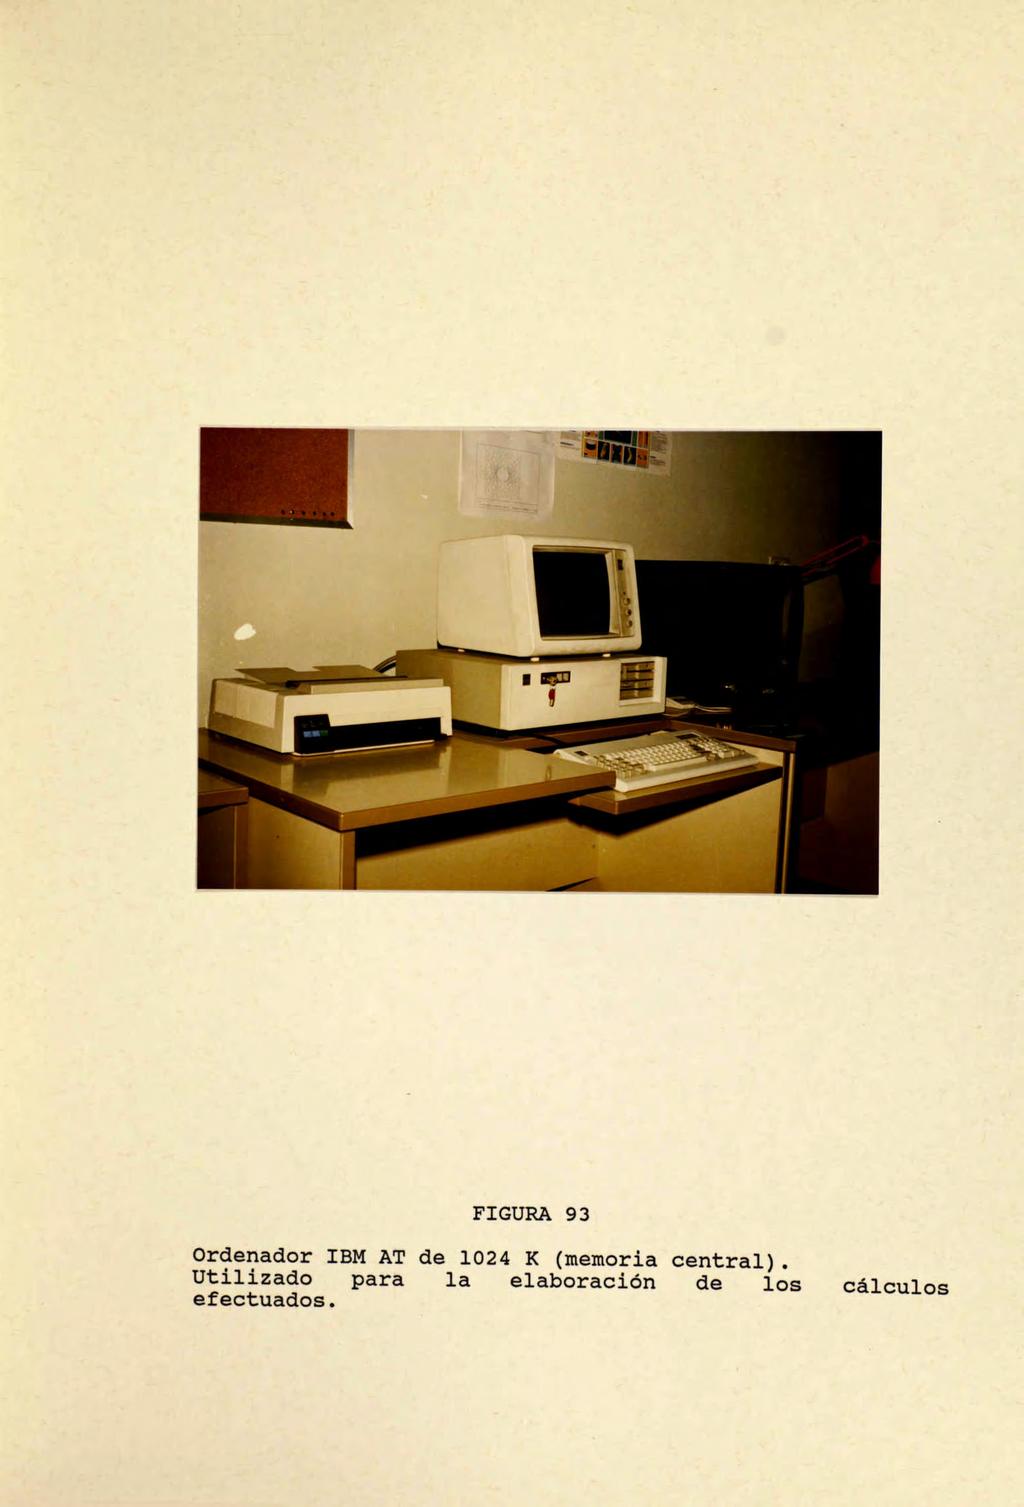 FIGURA 93 Ordenador IBM AT de 1024 K (memoria central).